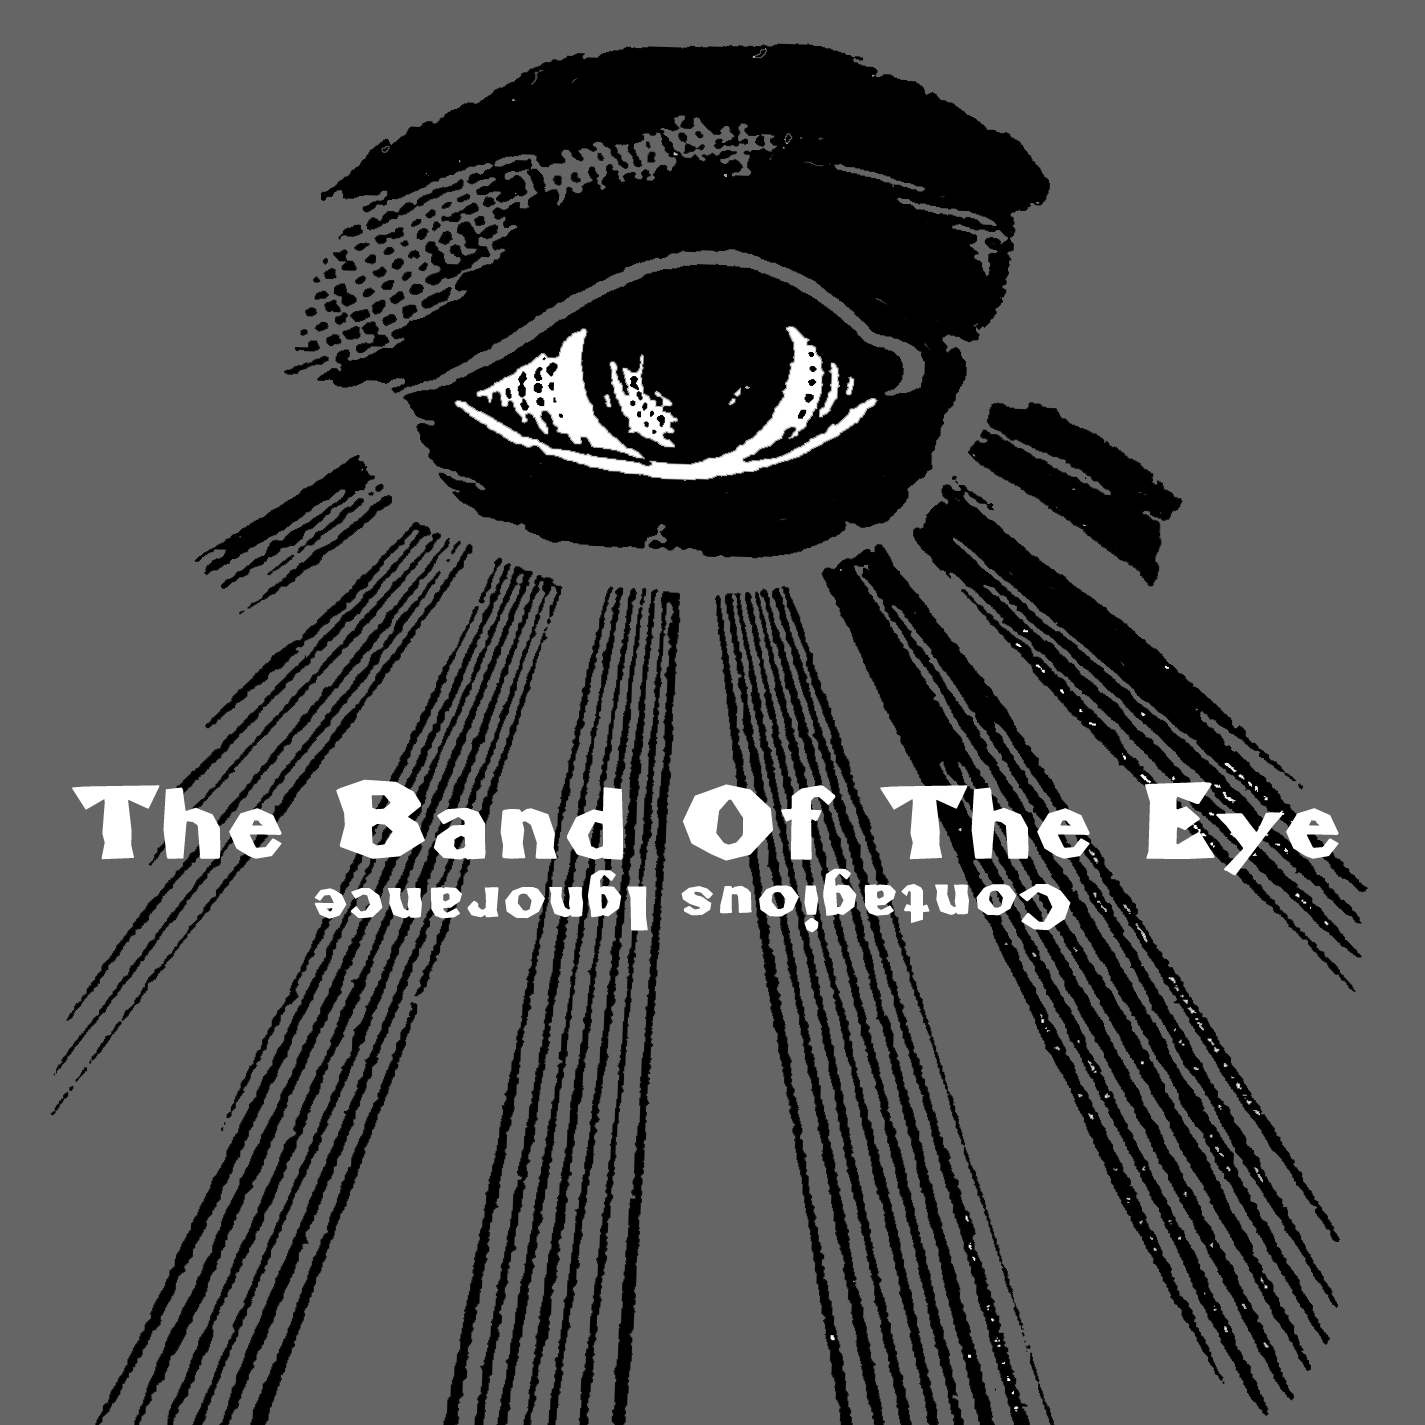 http://indiemusicpeople.com/uploads2/The_Band_of_the_Eye_-_thebandoftheeyecover.gif